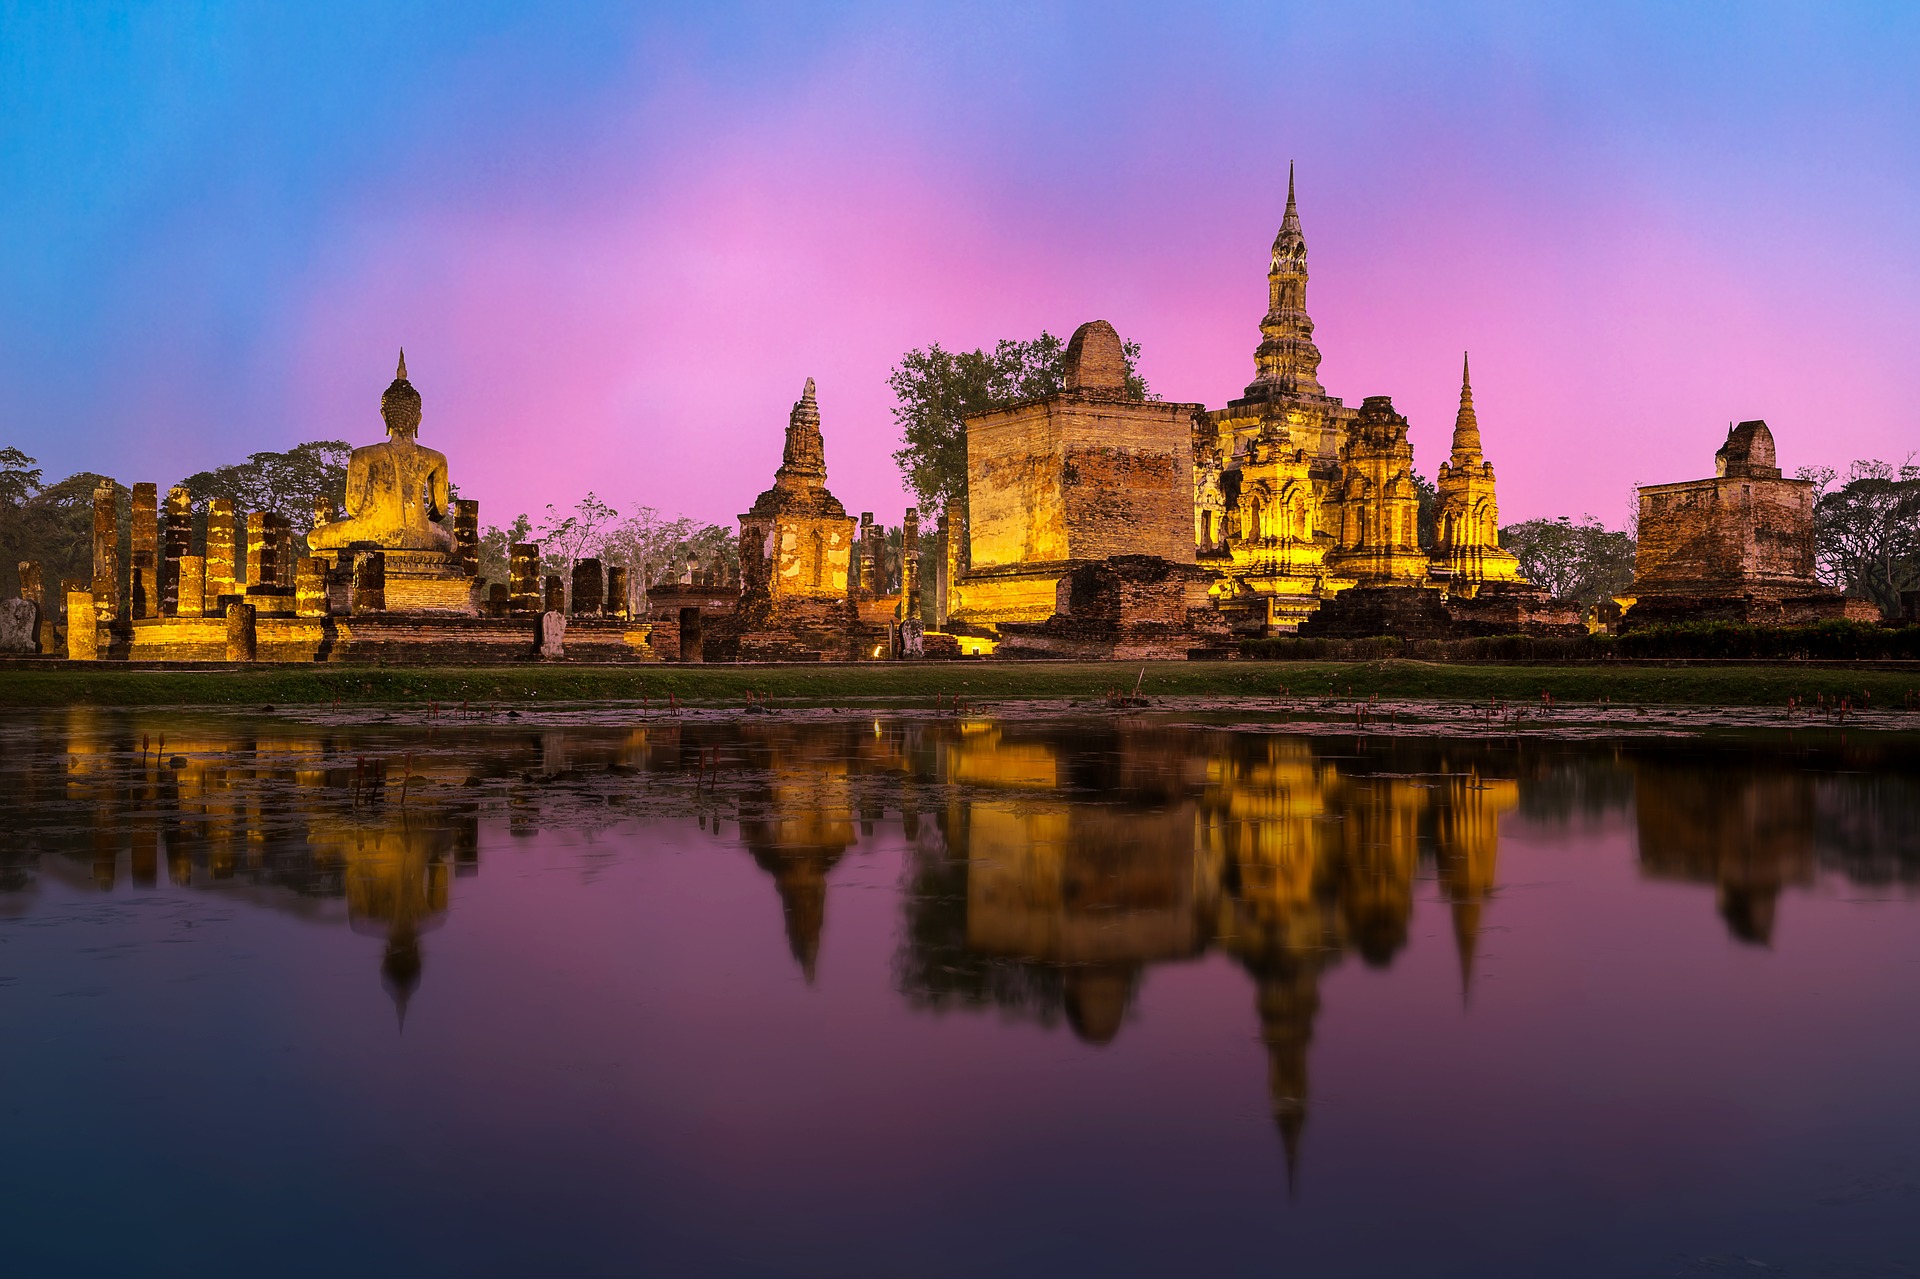 Phra Nakhon Si Ayutthaya Historical Park is a UNESCO World Heritage Site